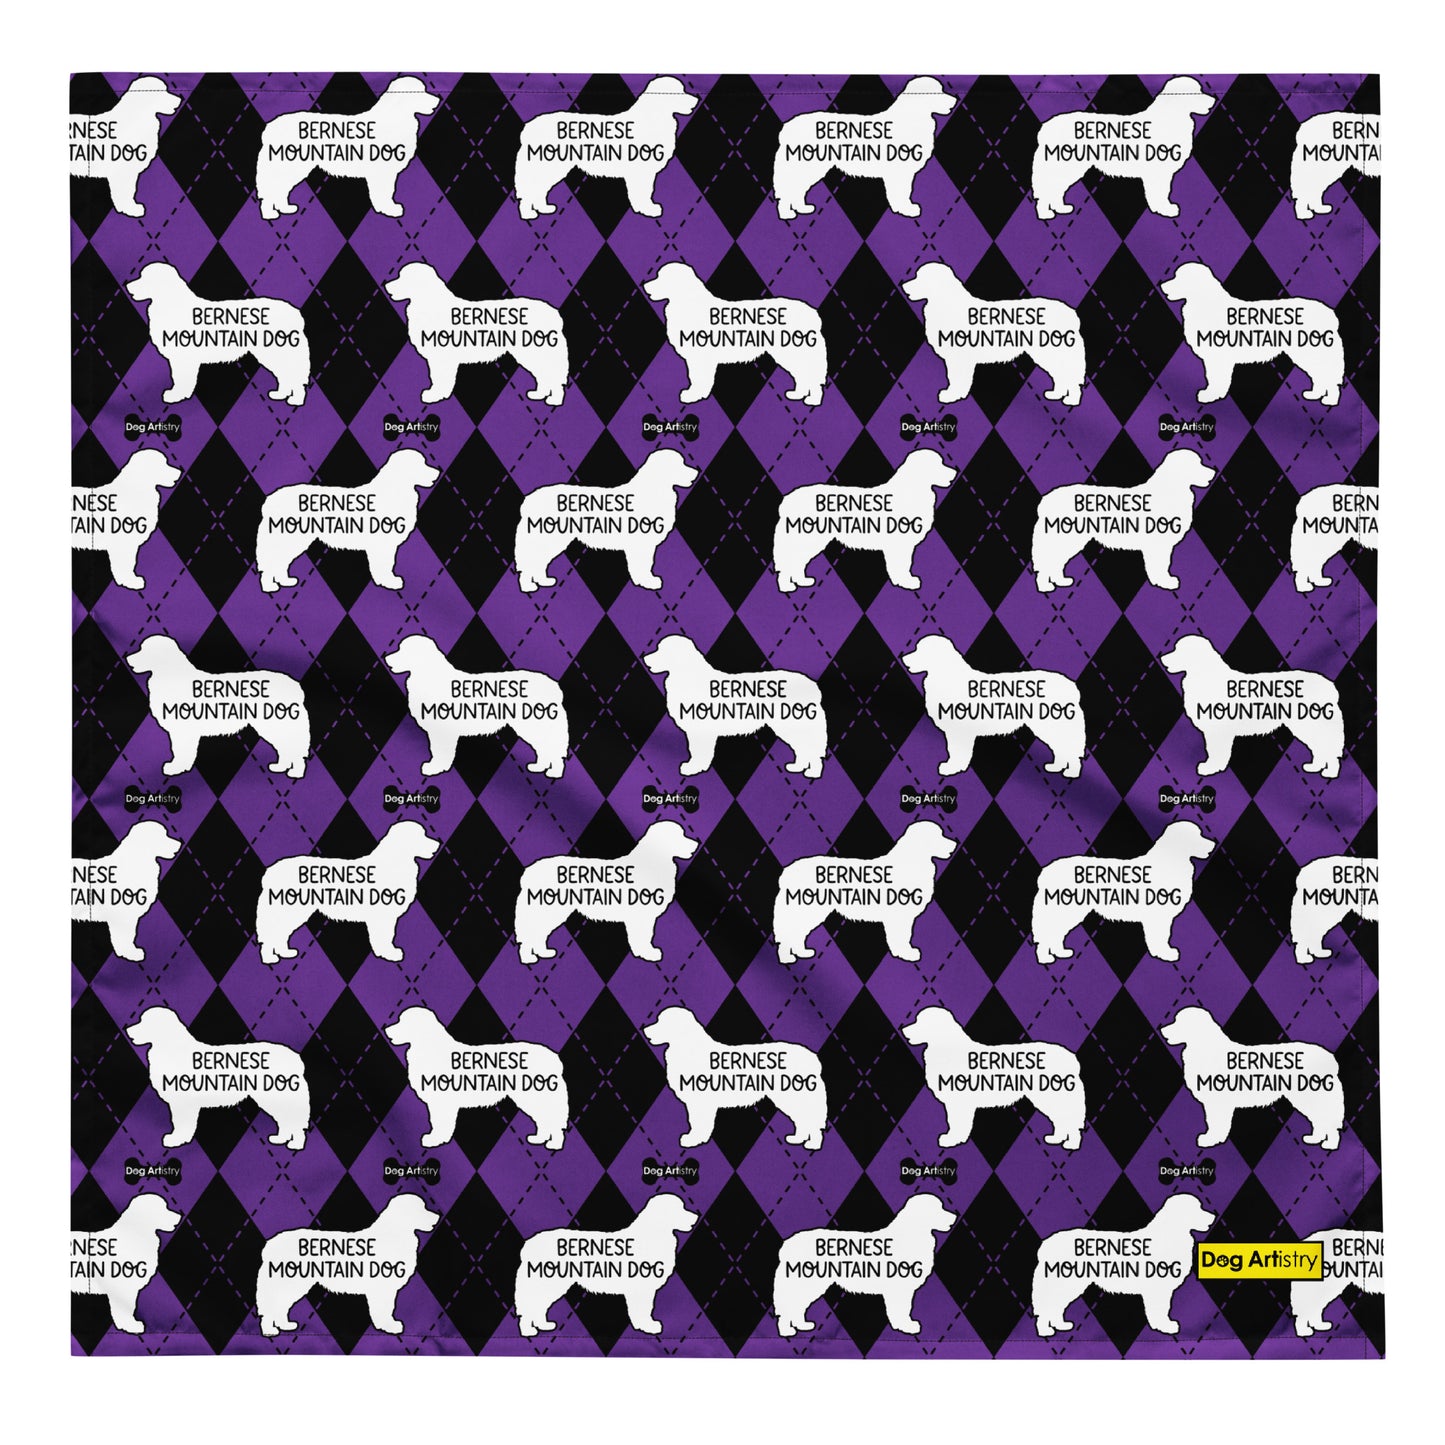 Bernese Mountain Dog Argyle Purple and Black All-over print bandana